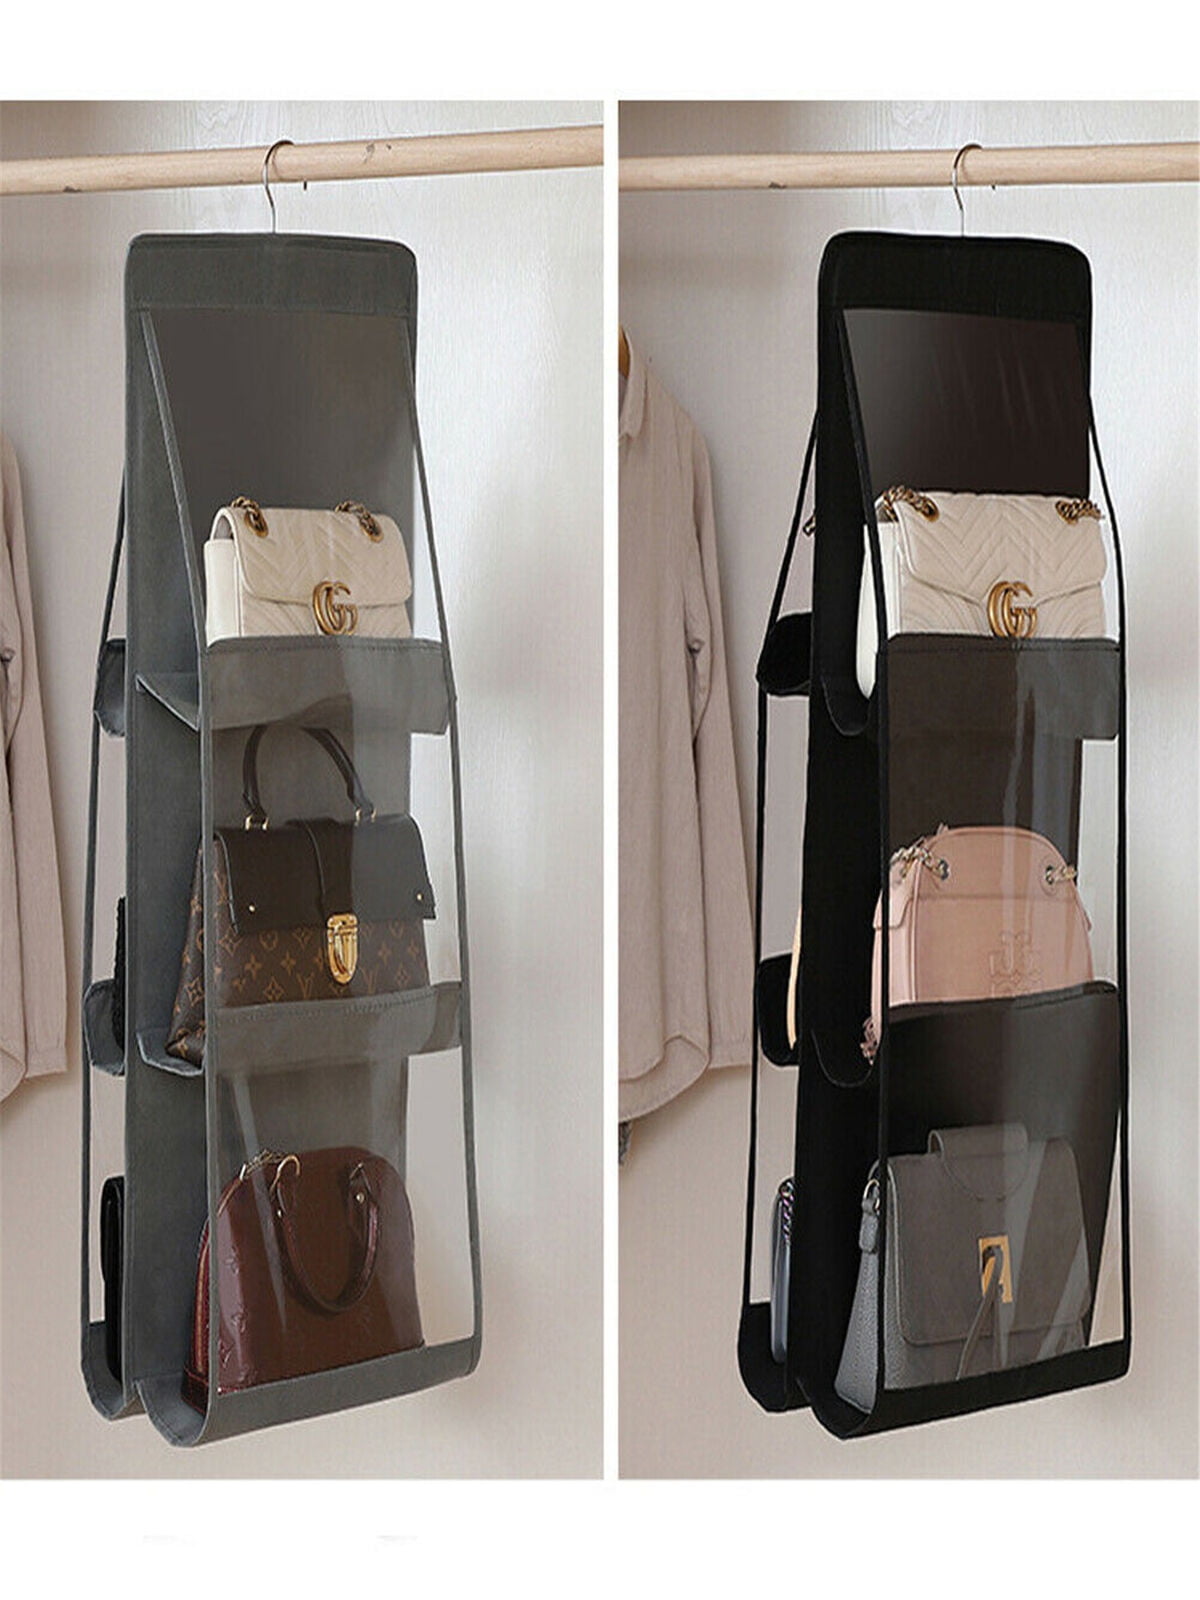 Black ArtPresarron 6-Pocket Hanging Handbag Organizer Dust-Proof Storage Organizer Dust-Proof Closet Wardrobe Hatstand Space Saver,Saving Organizers 